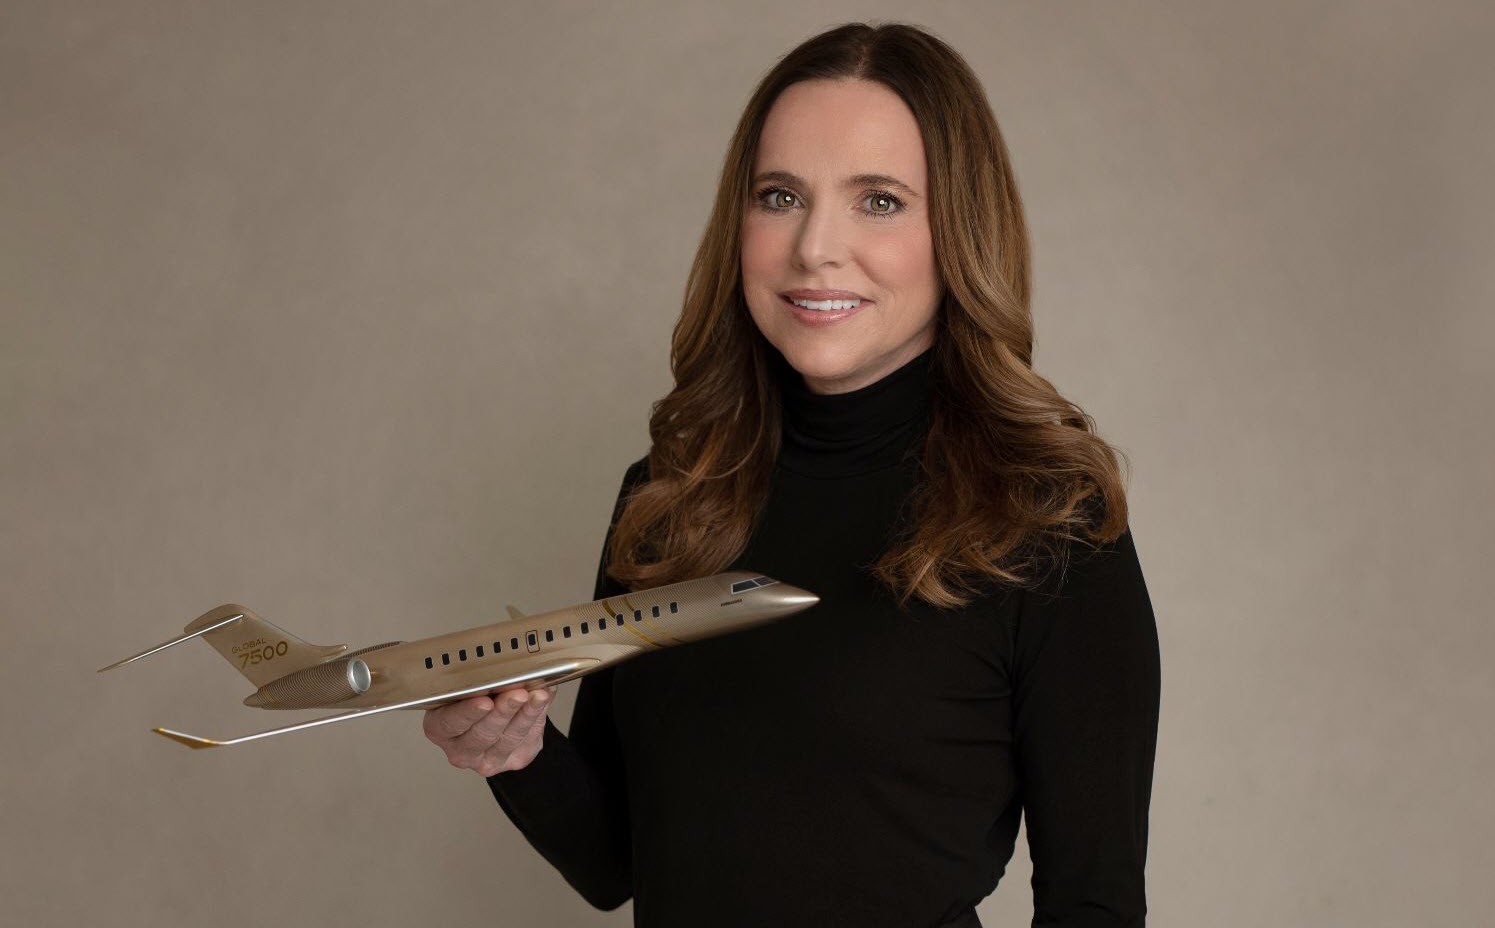 Kristen Cloud, U.S. Sales Director at Bombardier